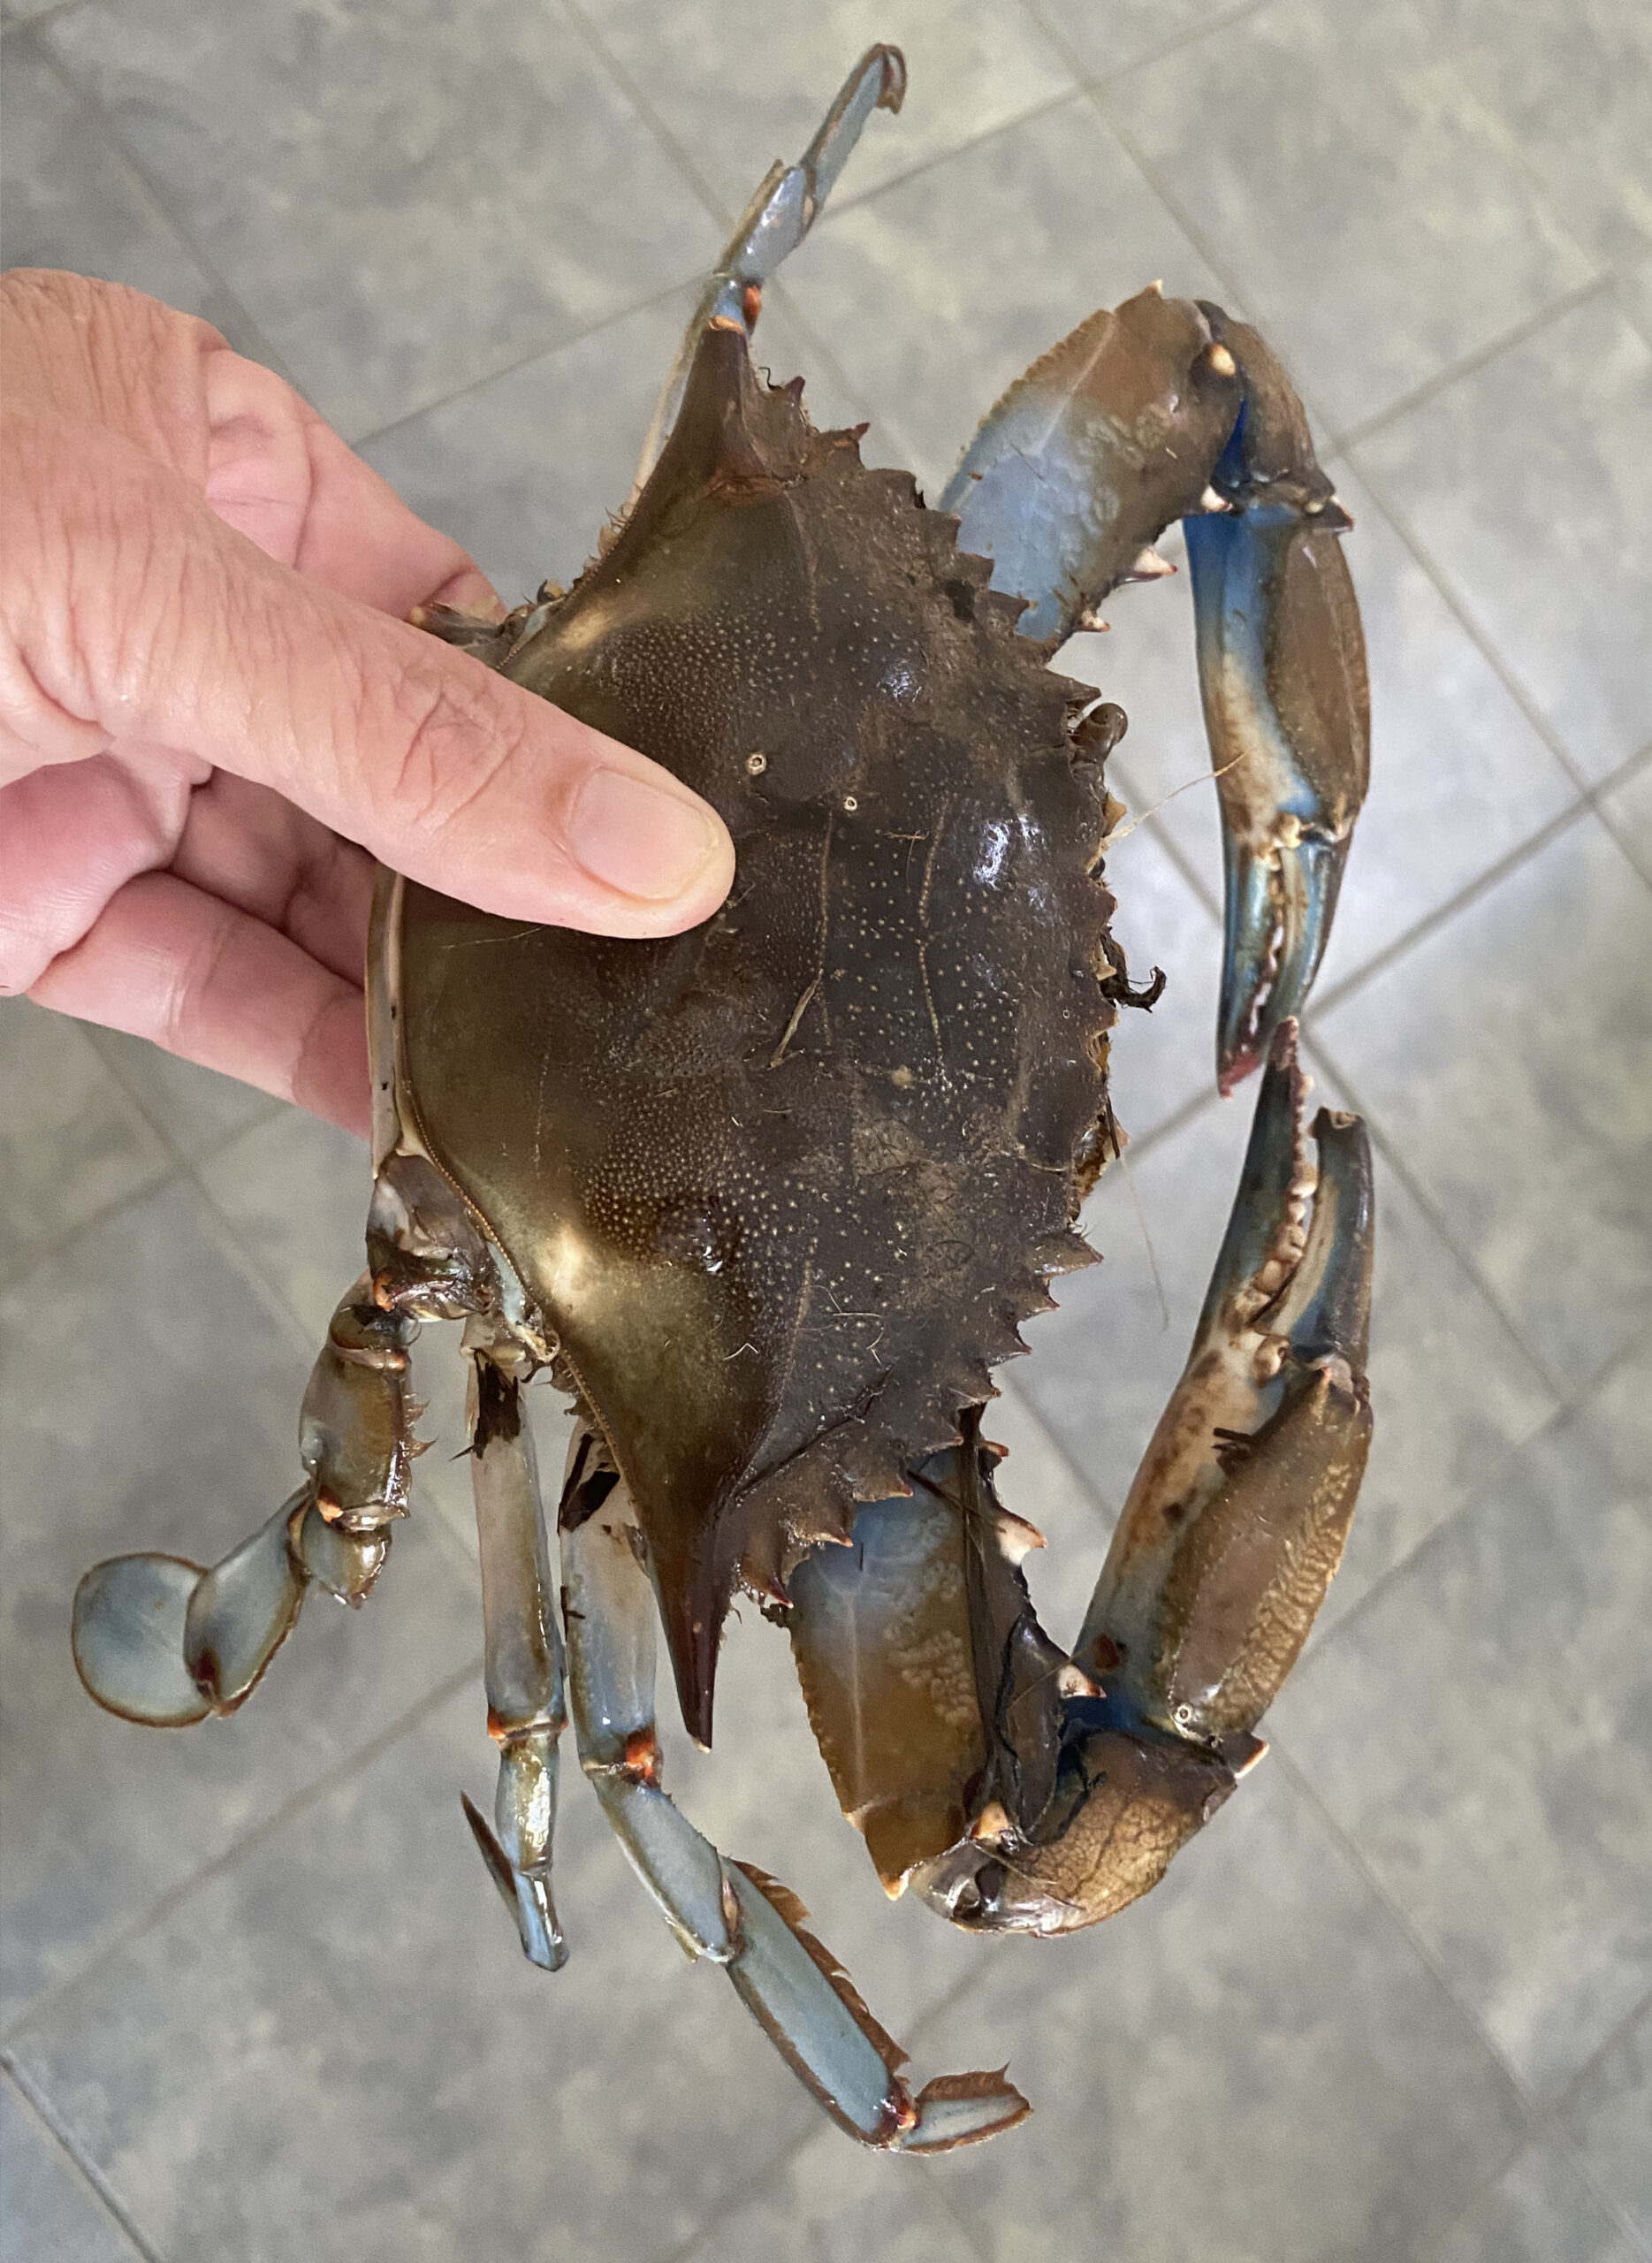 https://fernandinaobserver.com/wp-content/uploads/2022/10/live-blue-crab-scaled.jpg